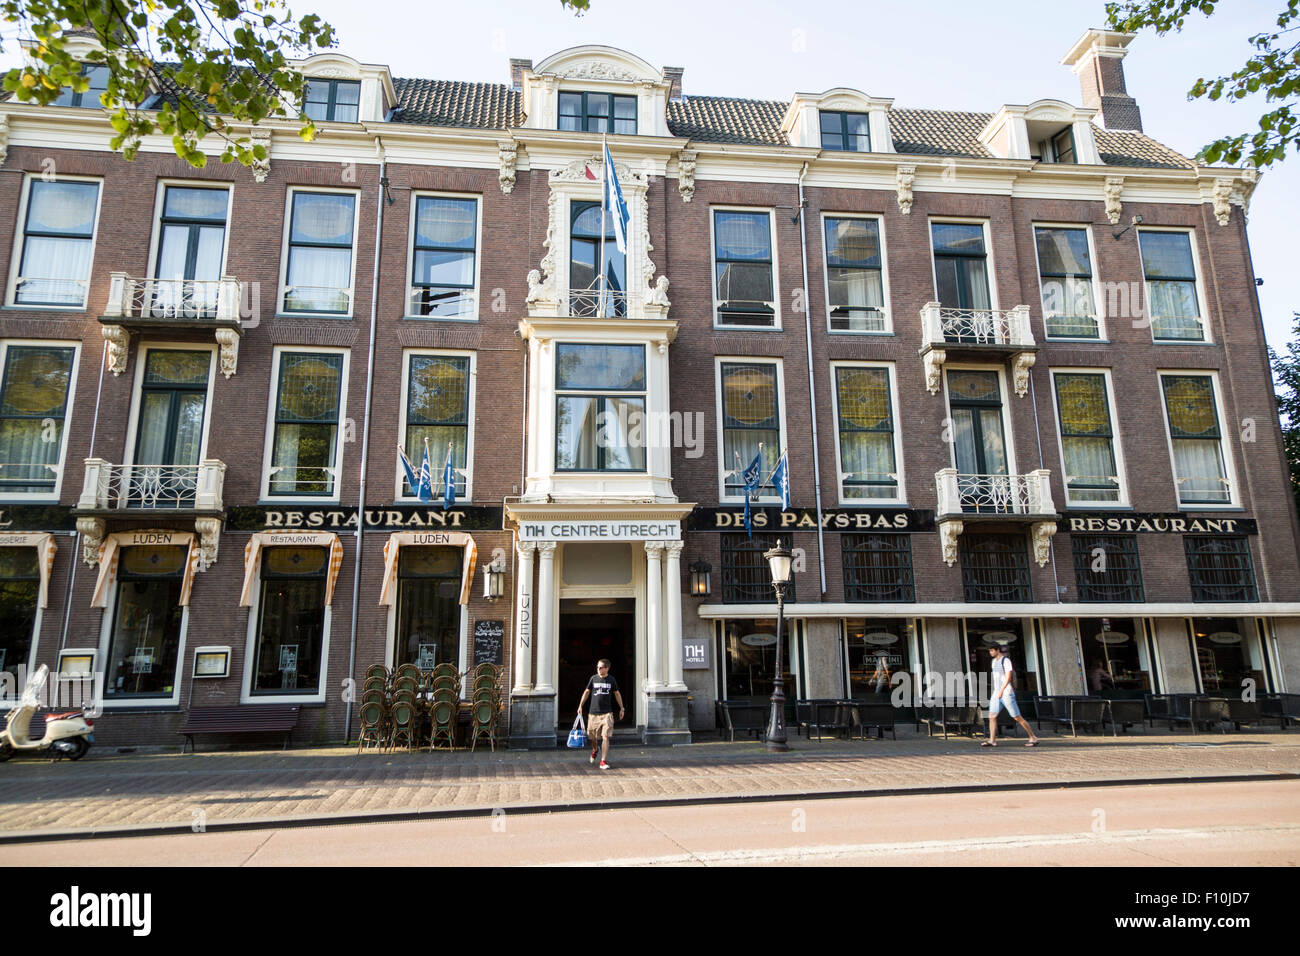 Des Pays-Bas Luden Centre restaurant building, Utrecht, Netherlands Stock  Photo - Alamy